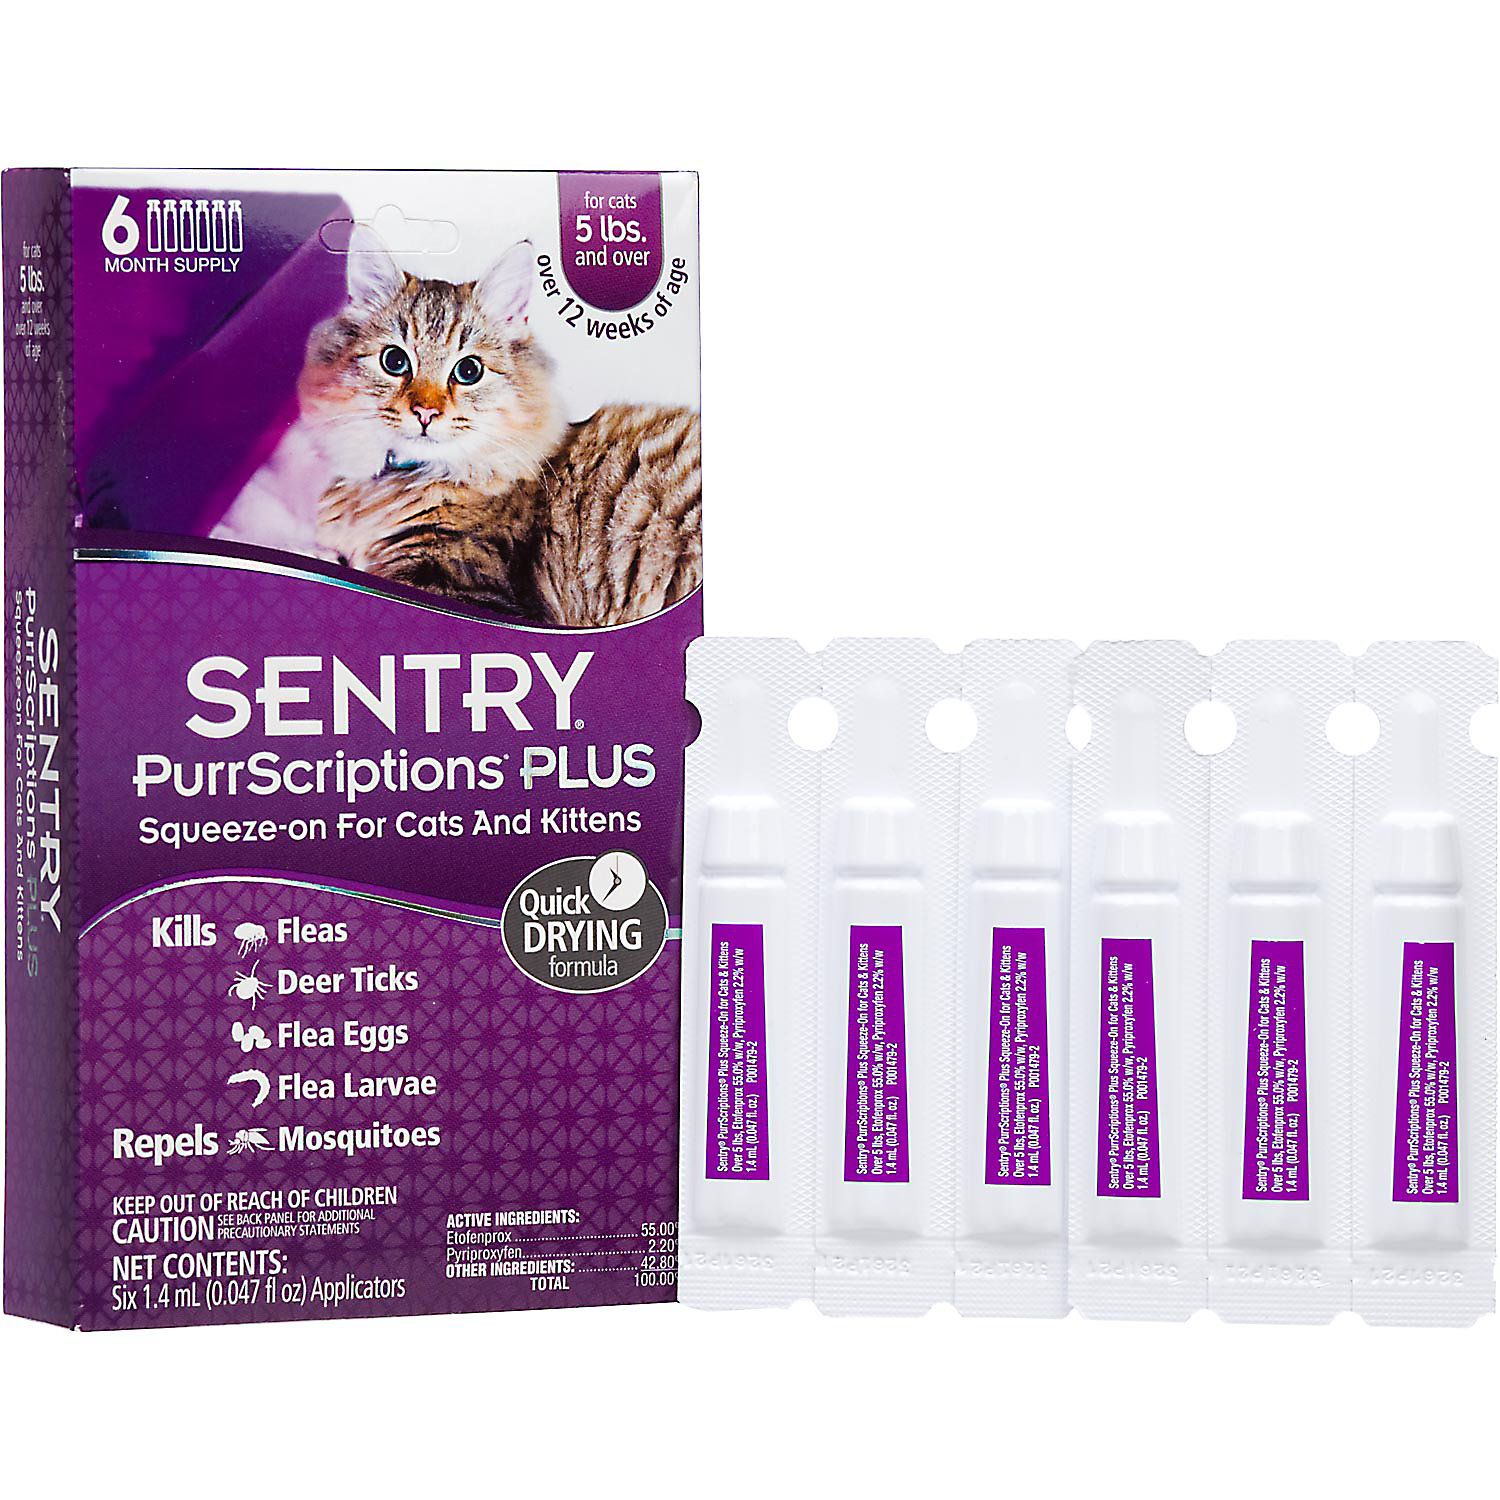 Sentry PurrScriptions Plus Cat & Kitten Squeeze-On Flea & 